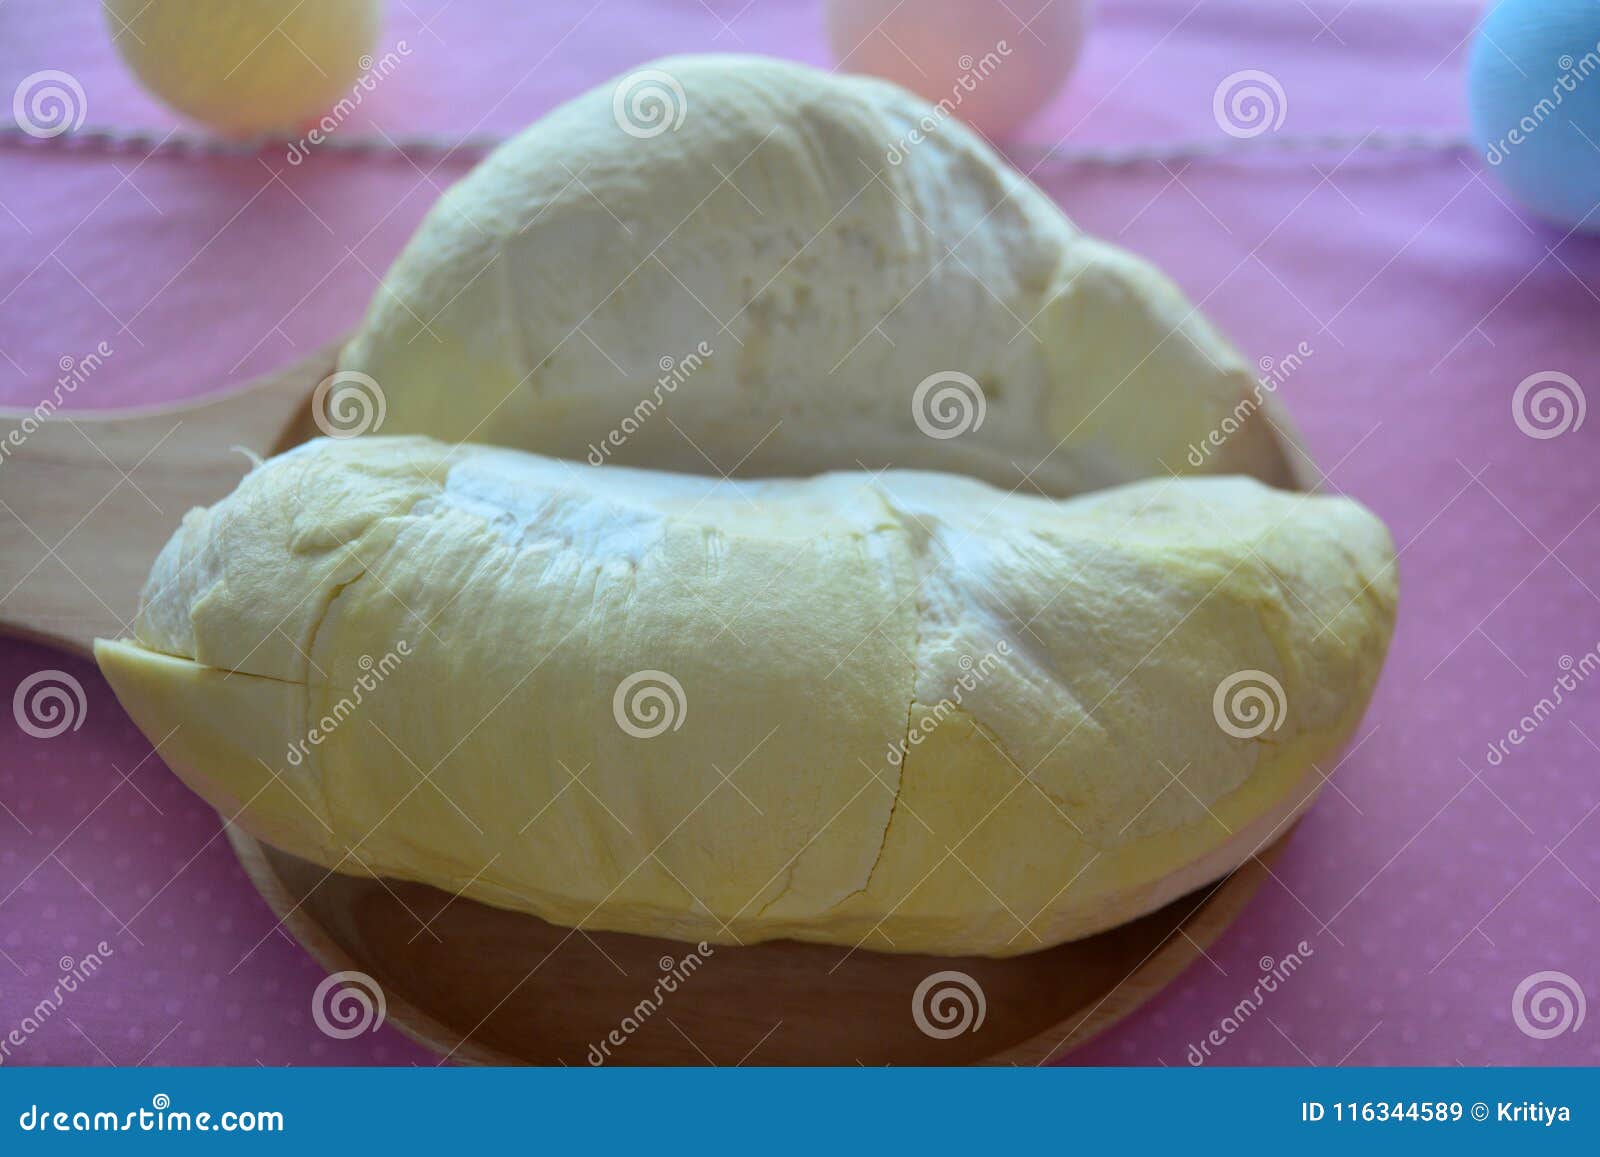 Durian ο βασιλιάς των φρούτων στο ξύλινο πιάτο